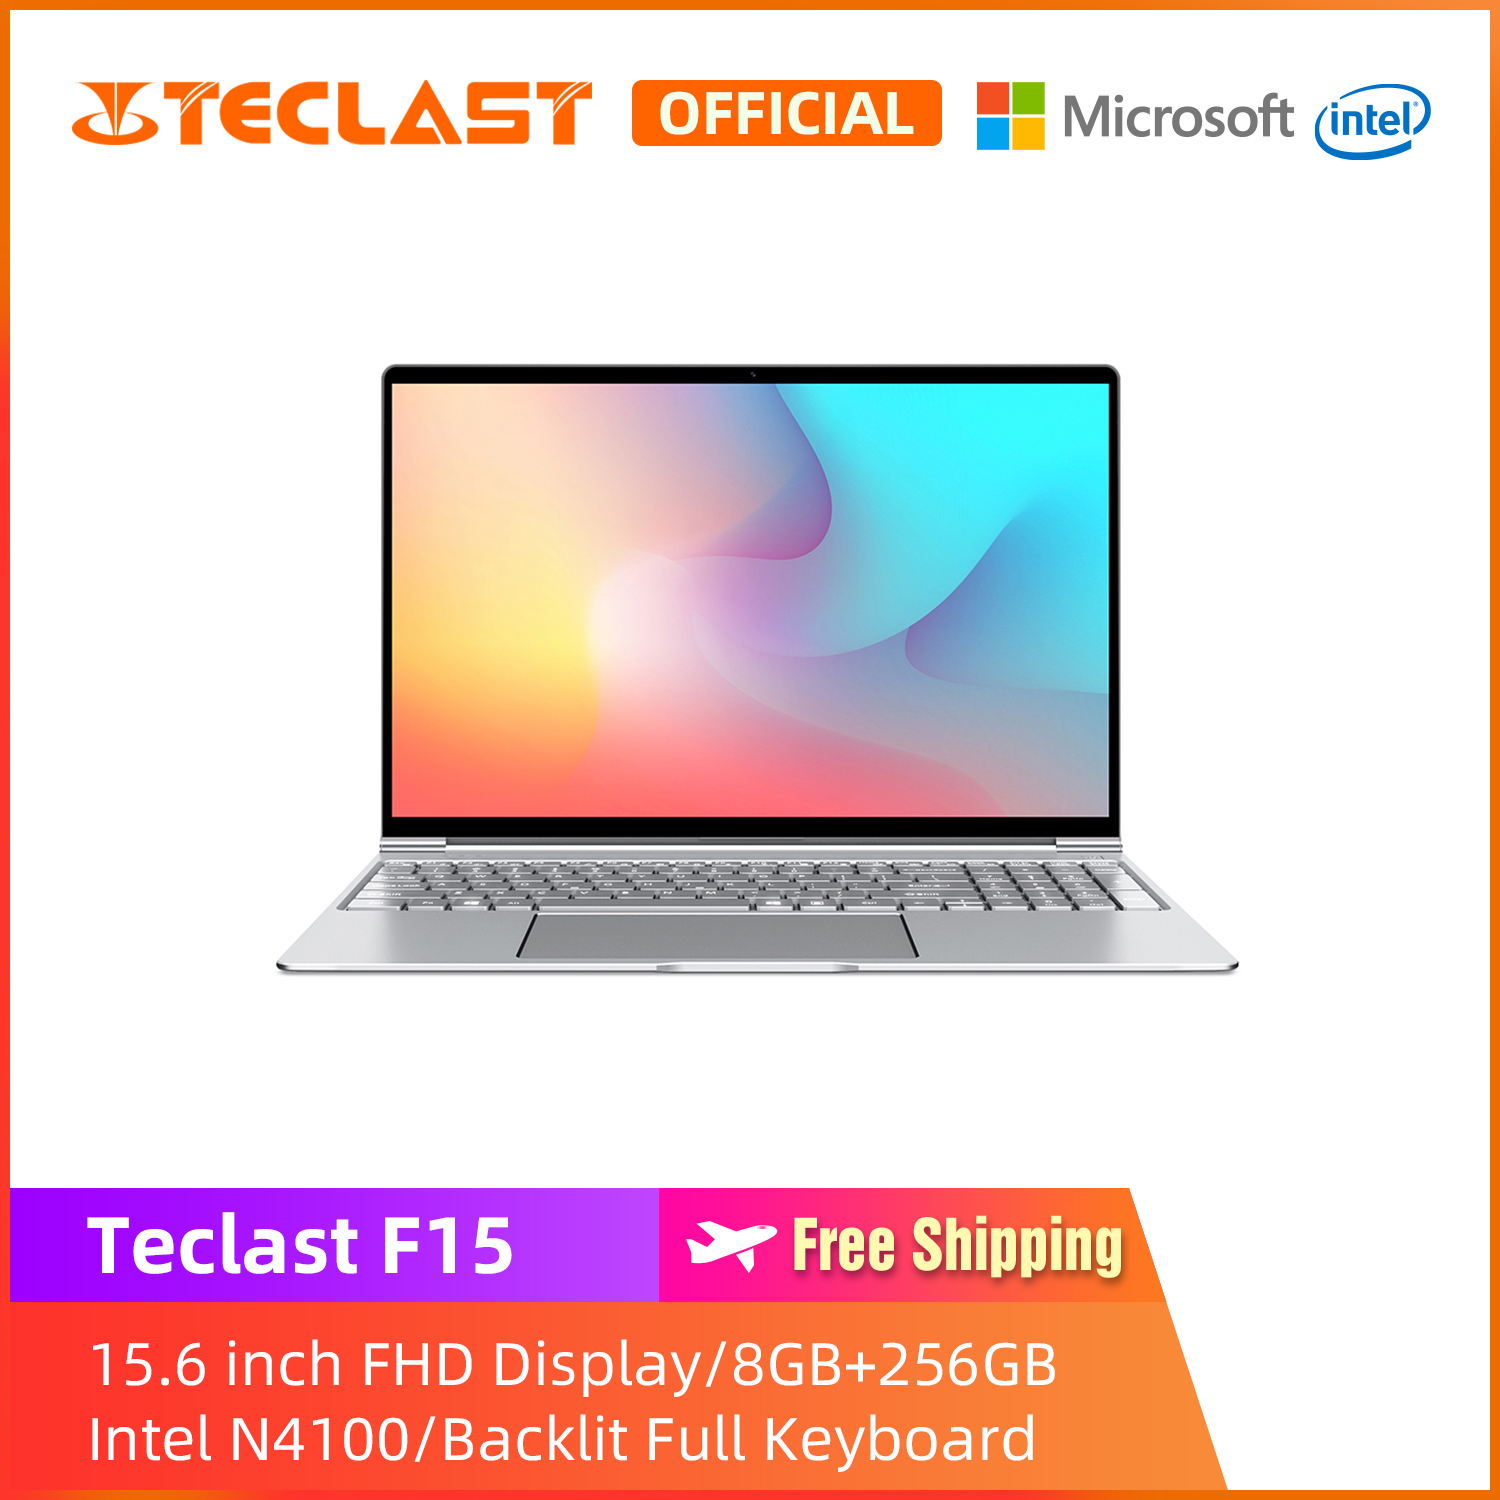 【Teclast Official】F15 Laptop/15.6 inch/Intel Gemini Lake N4100 CPU /Windows 10/8GB+256GB SSD/ 1920X1080 Resolution/Backit Full Keyboard/Dual Band WIFI